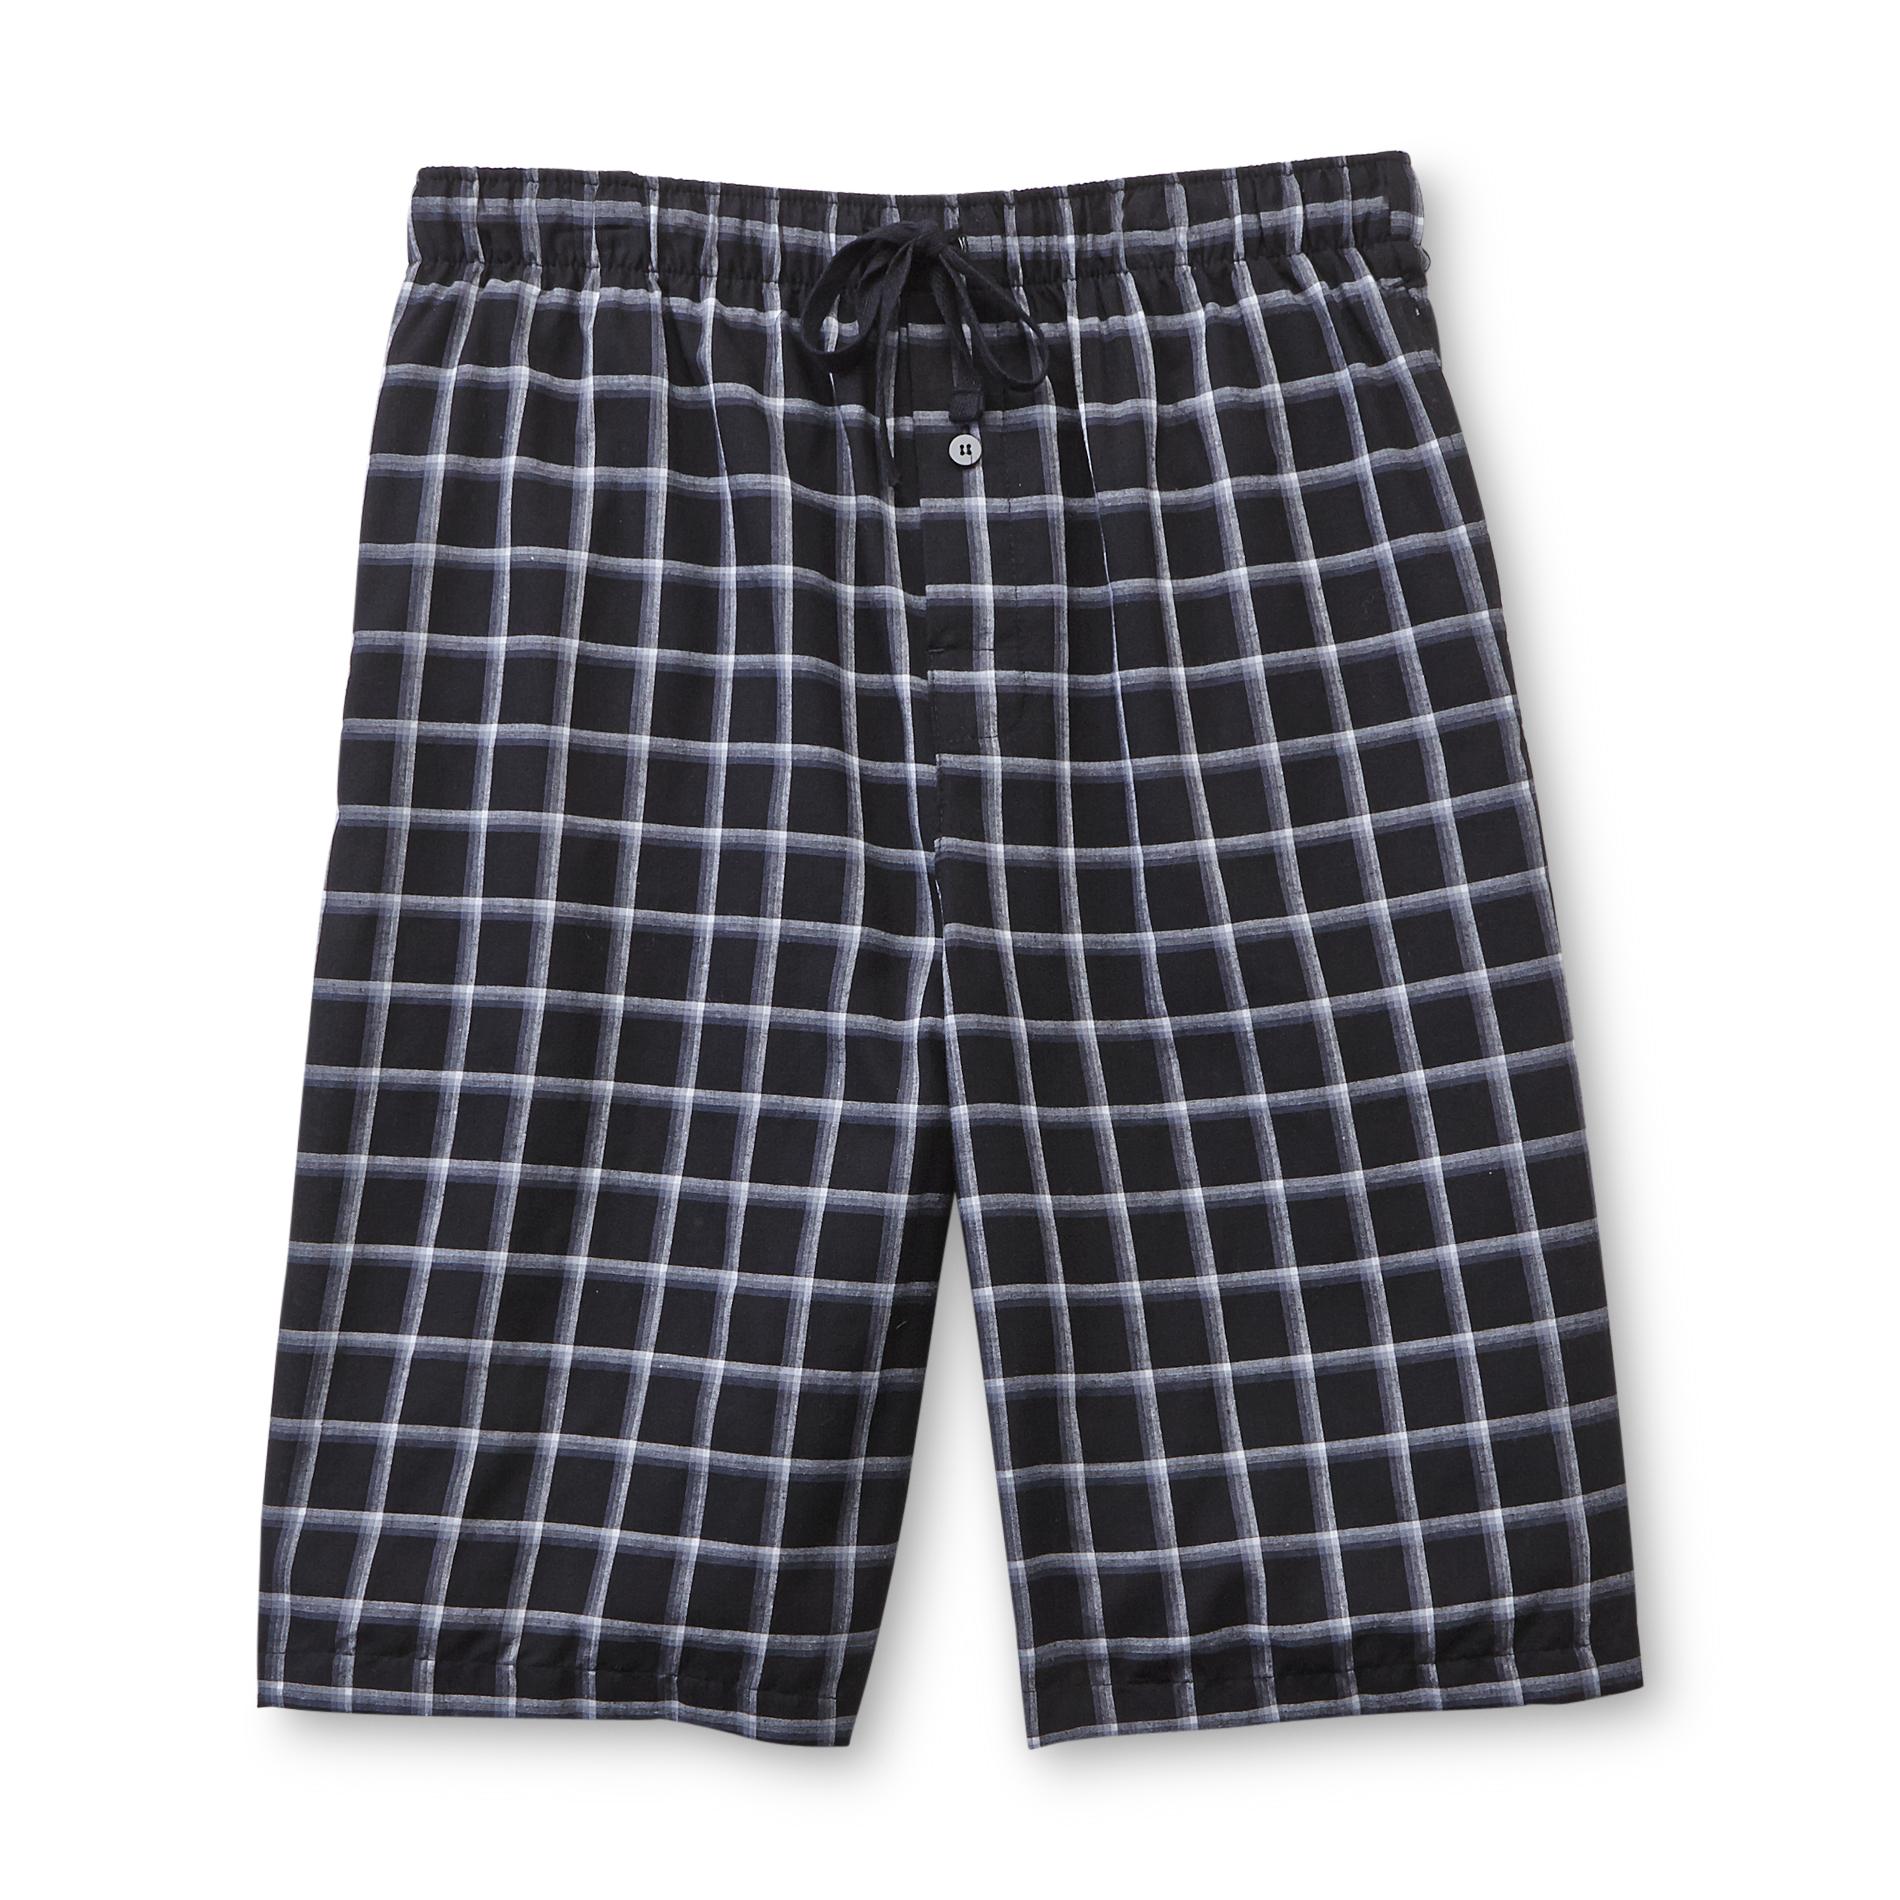 Basic Editions Men's Big & Tall Poplin Pajama Shorts - Plaid